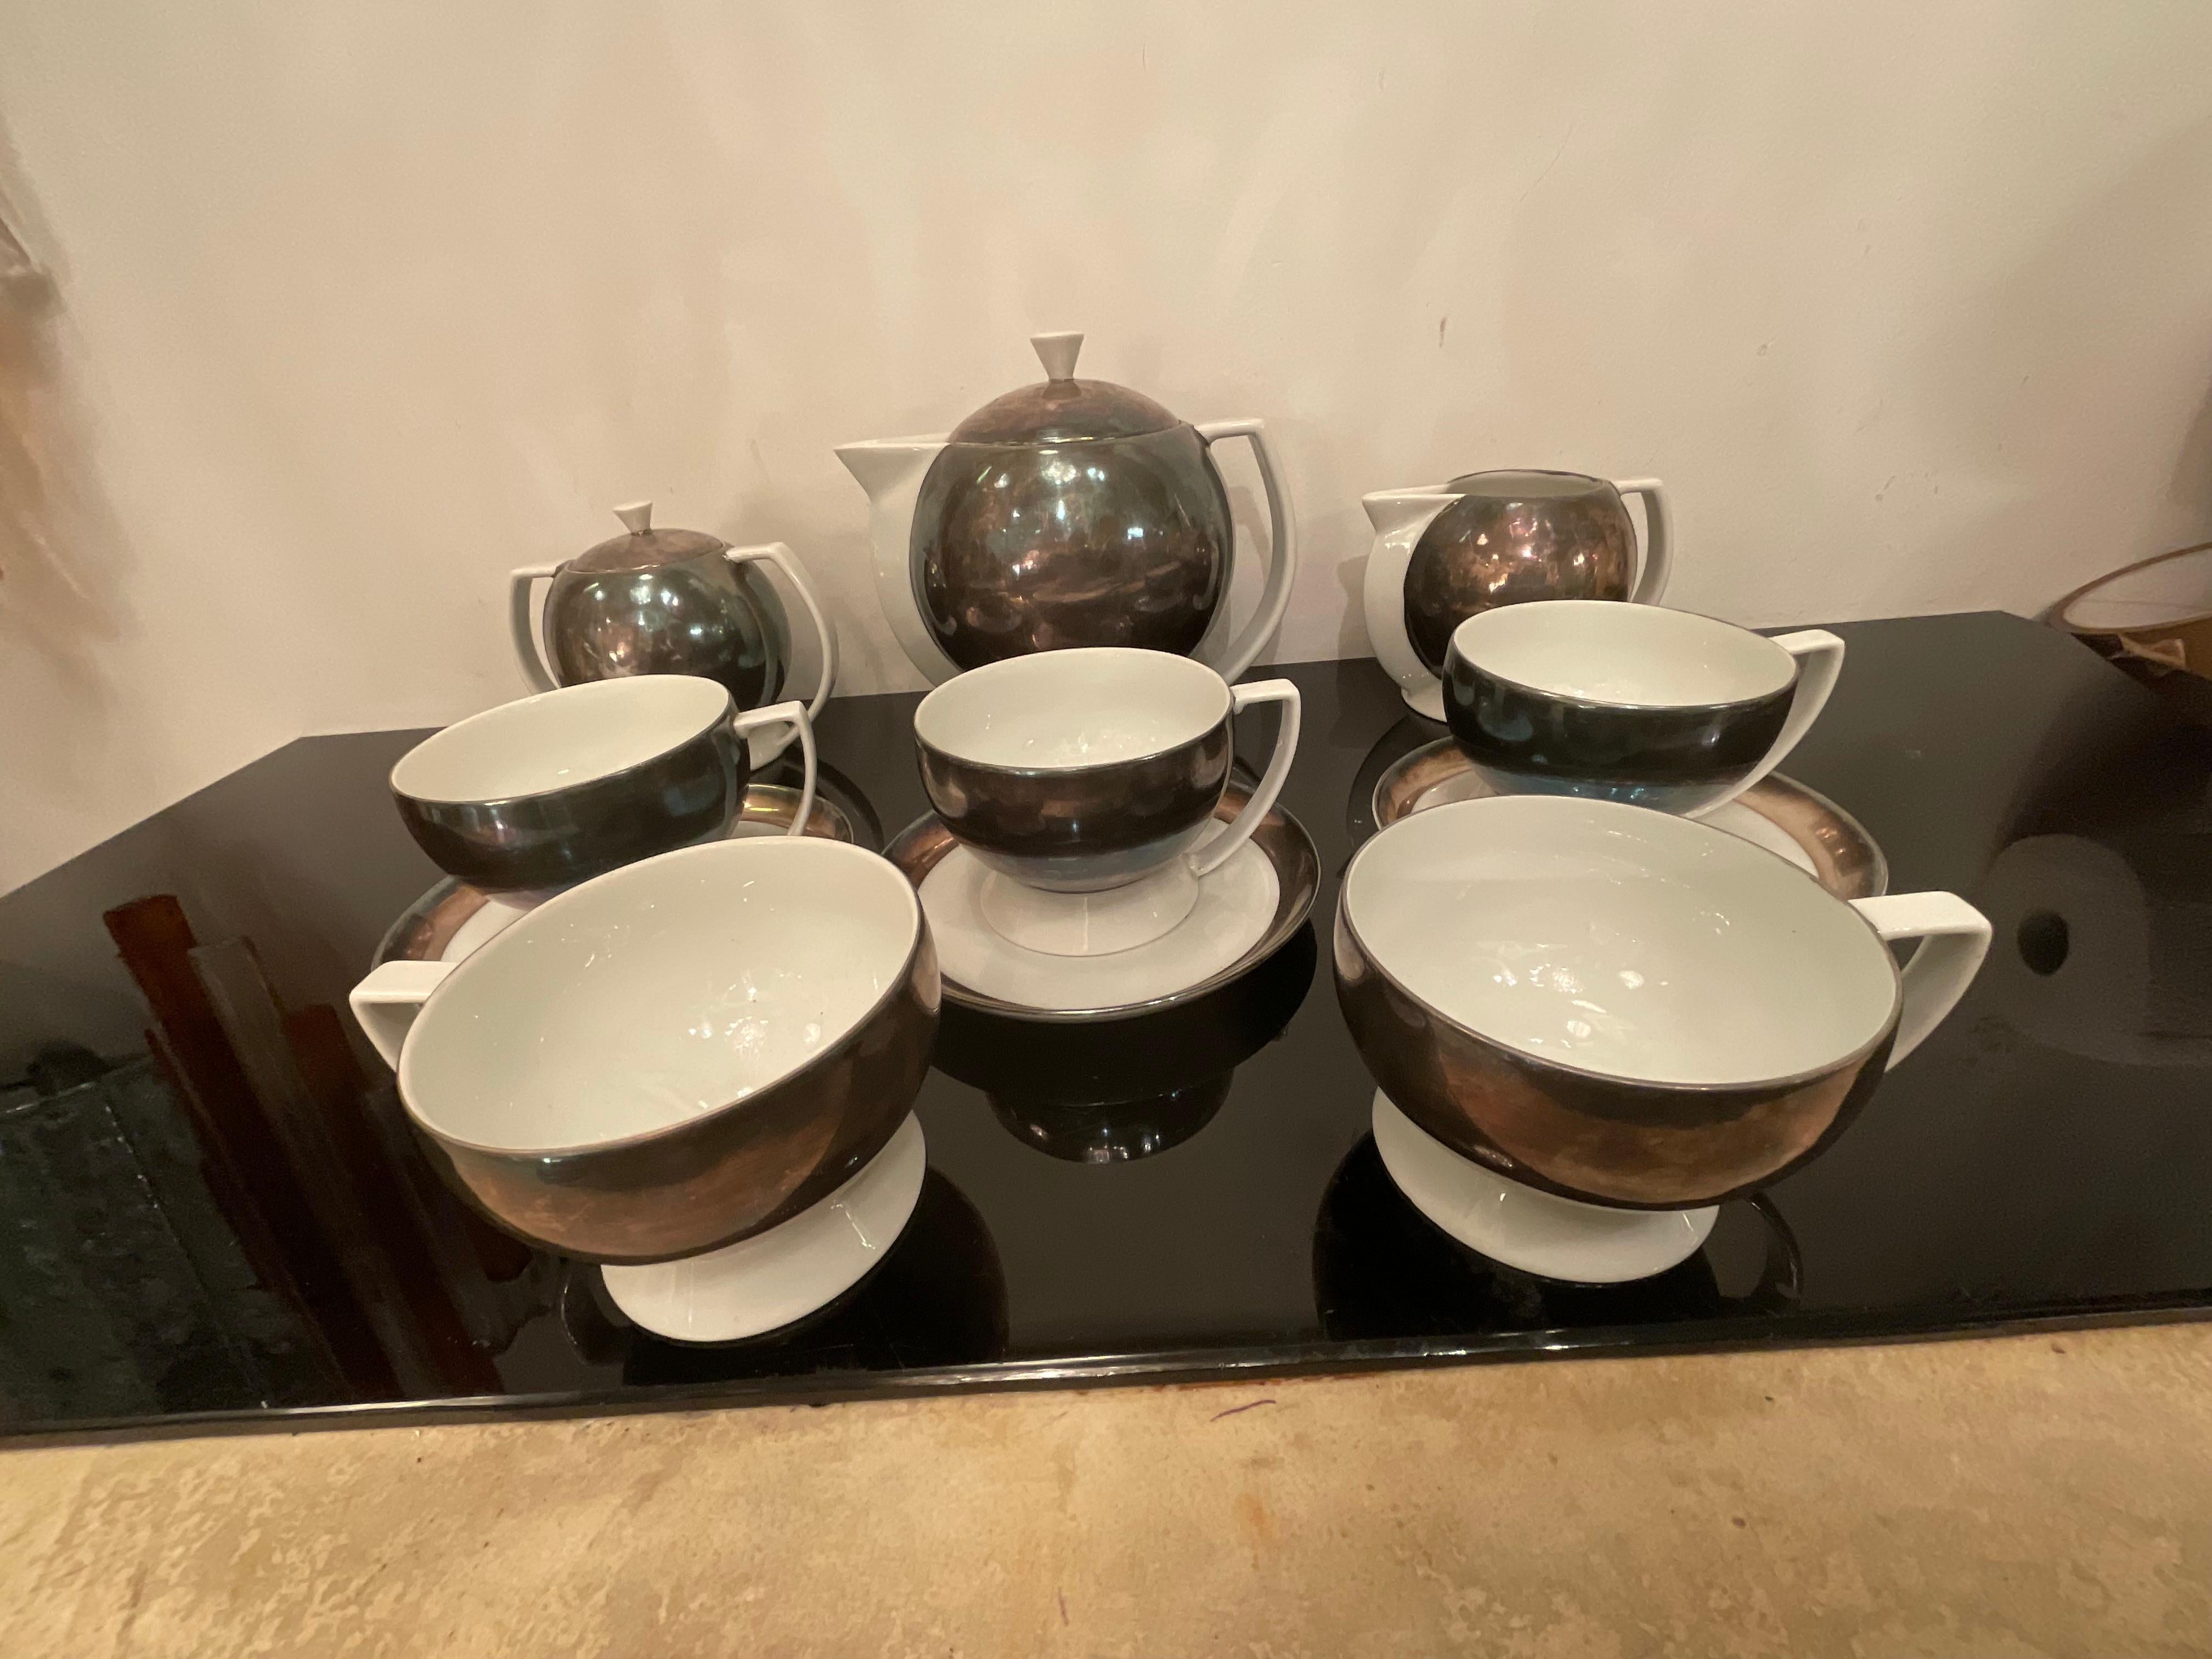 Porcelain Guido ANDLOVITZ - LAVENO CERAMIC 1930s - Tea service - 13 PIECES For Sale